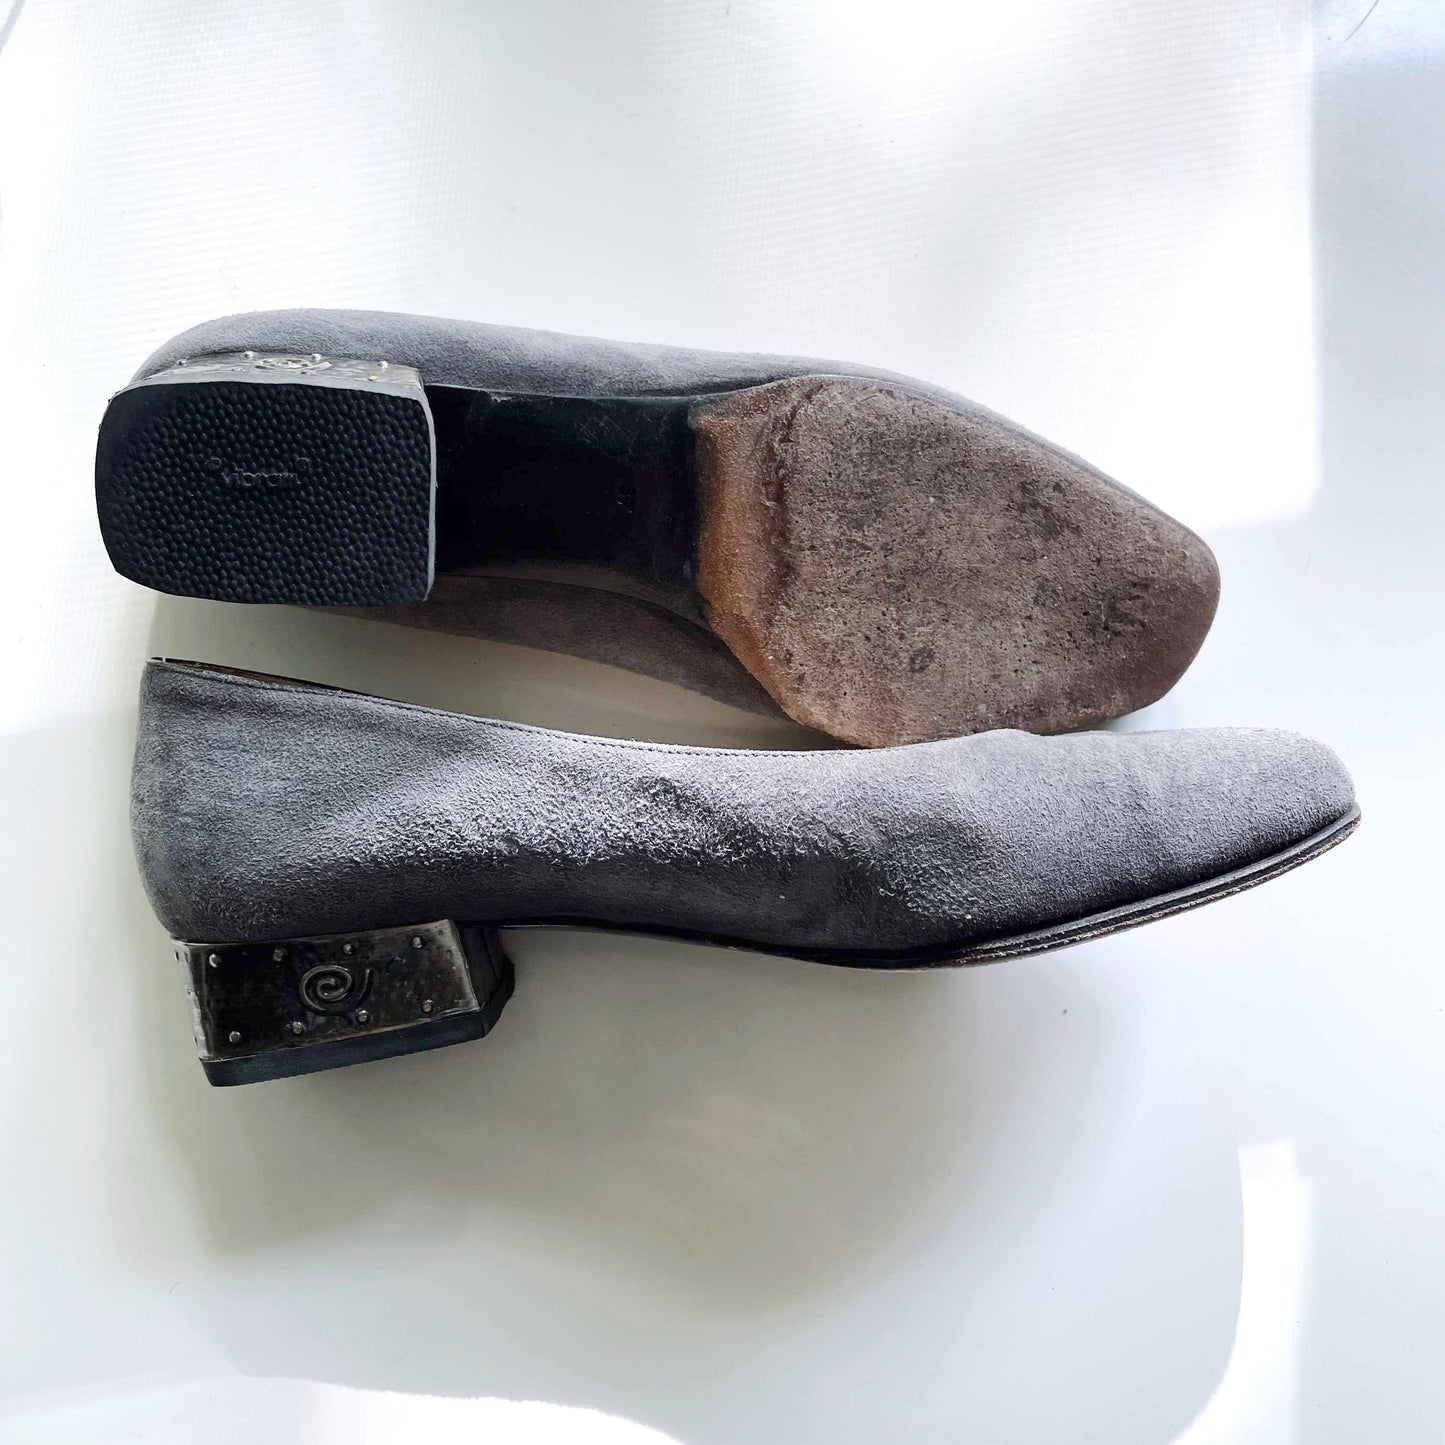 bruno magli suede day heel with metal art heels - size 37